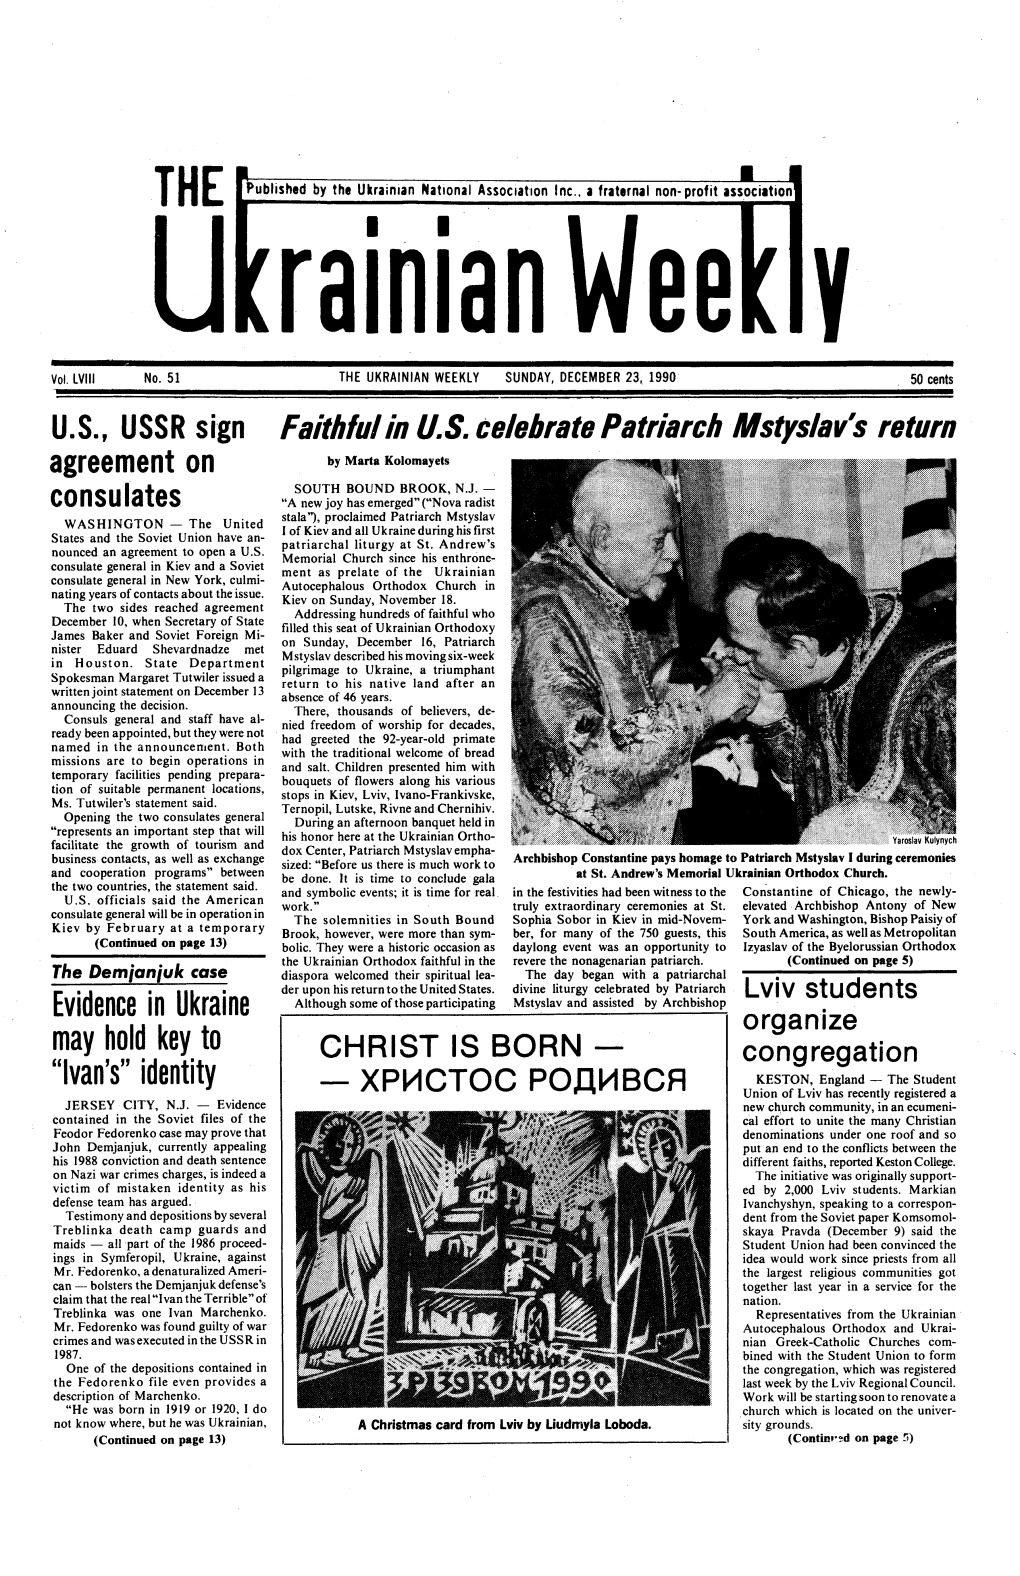 The Ukrainian Weekly 1990, No.51